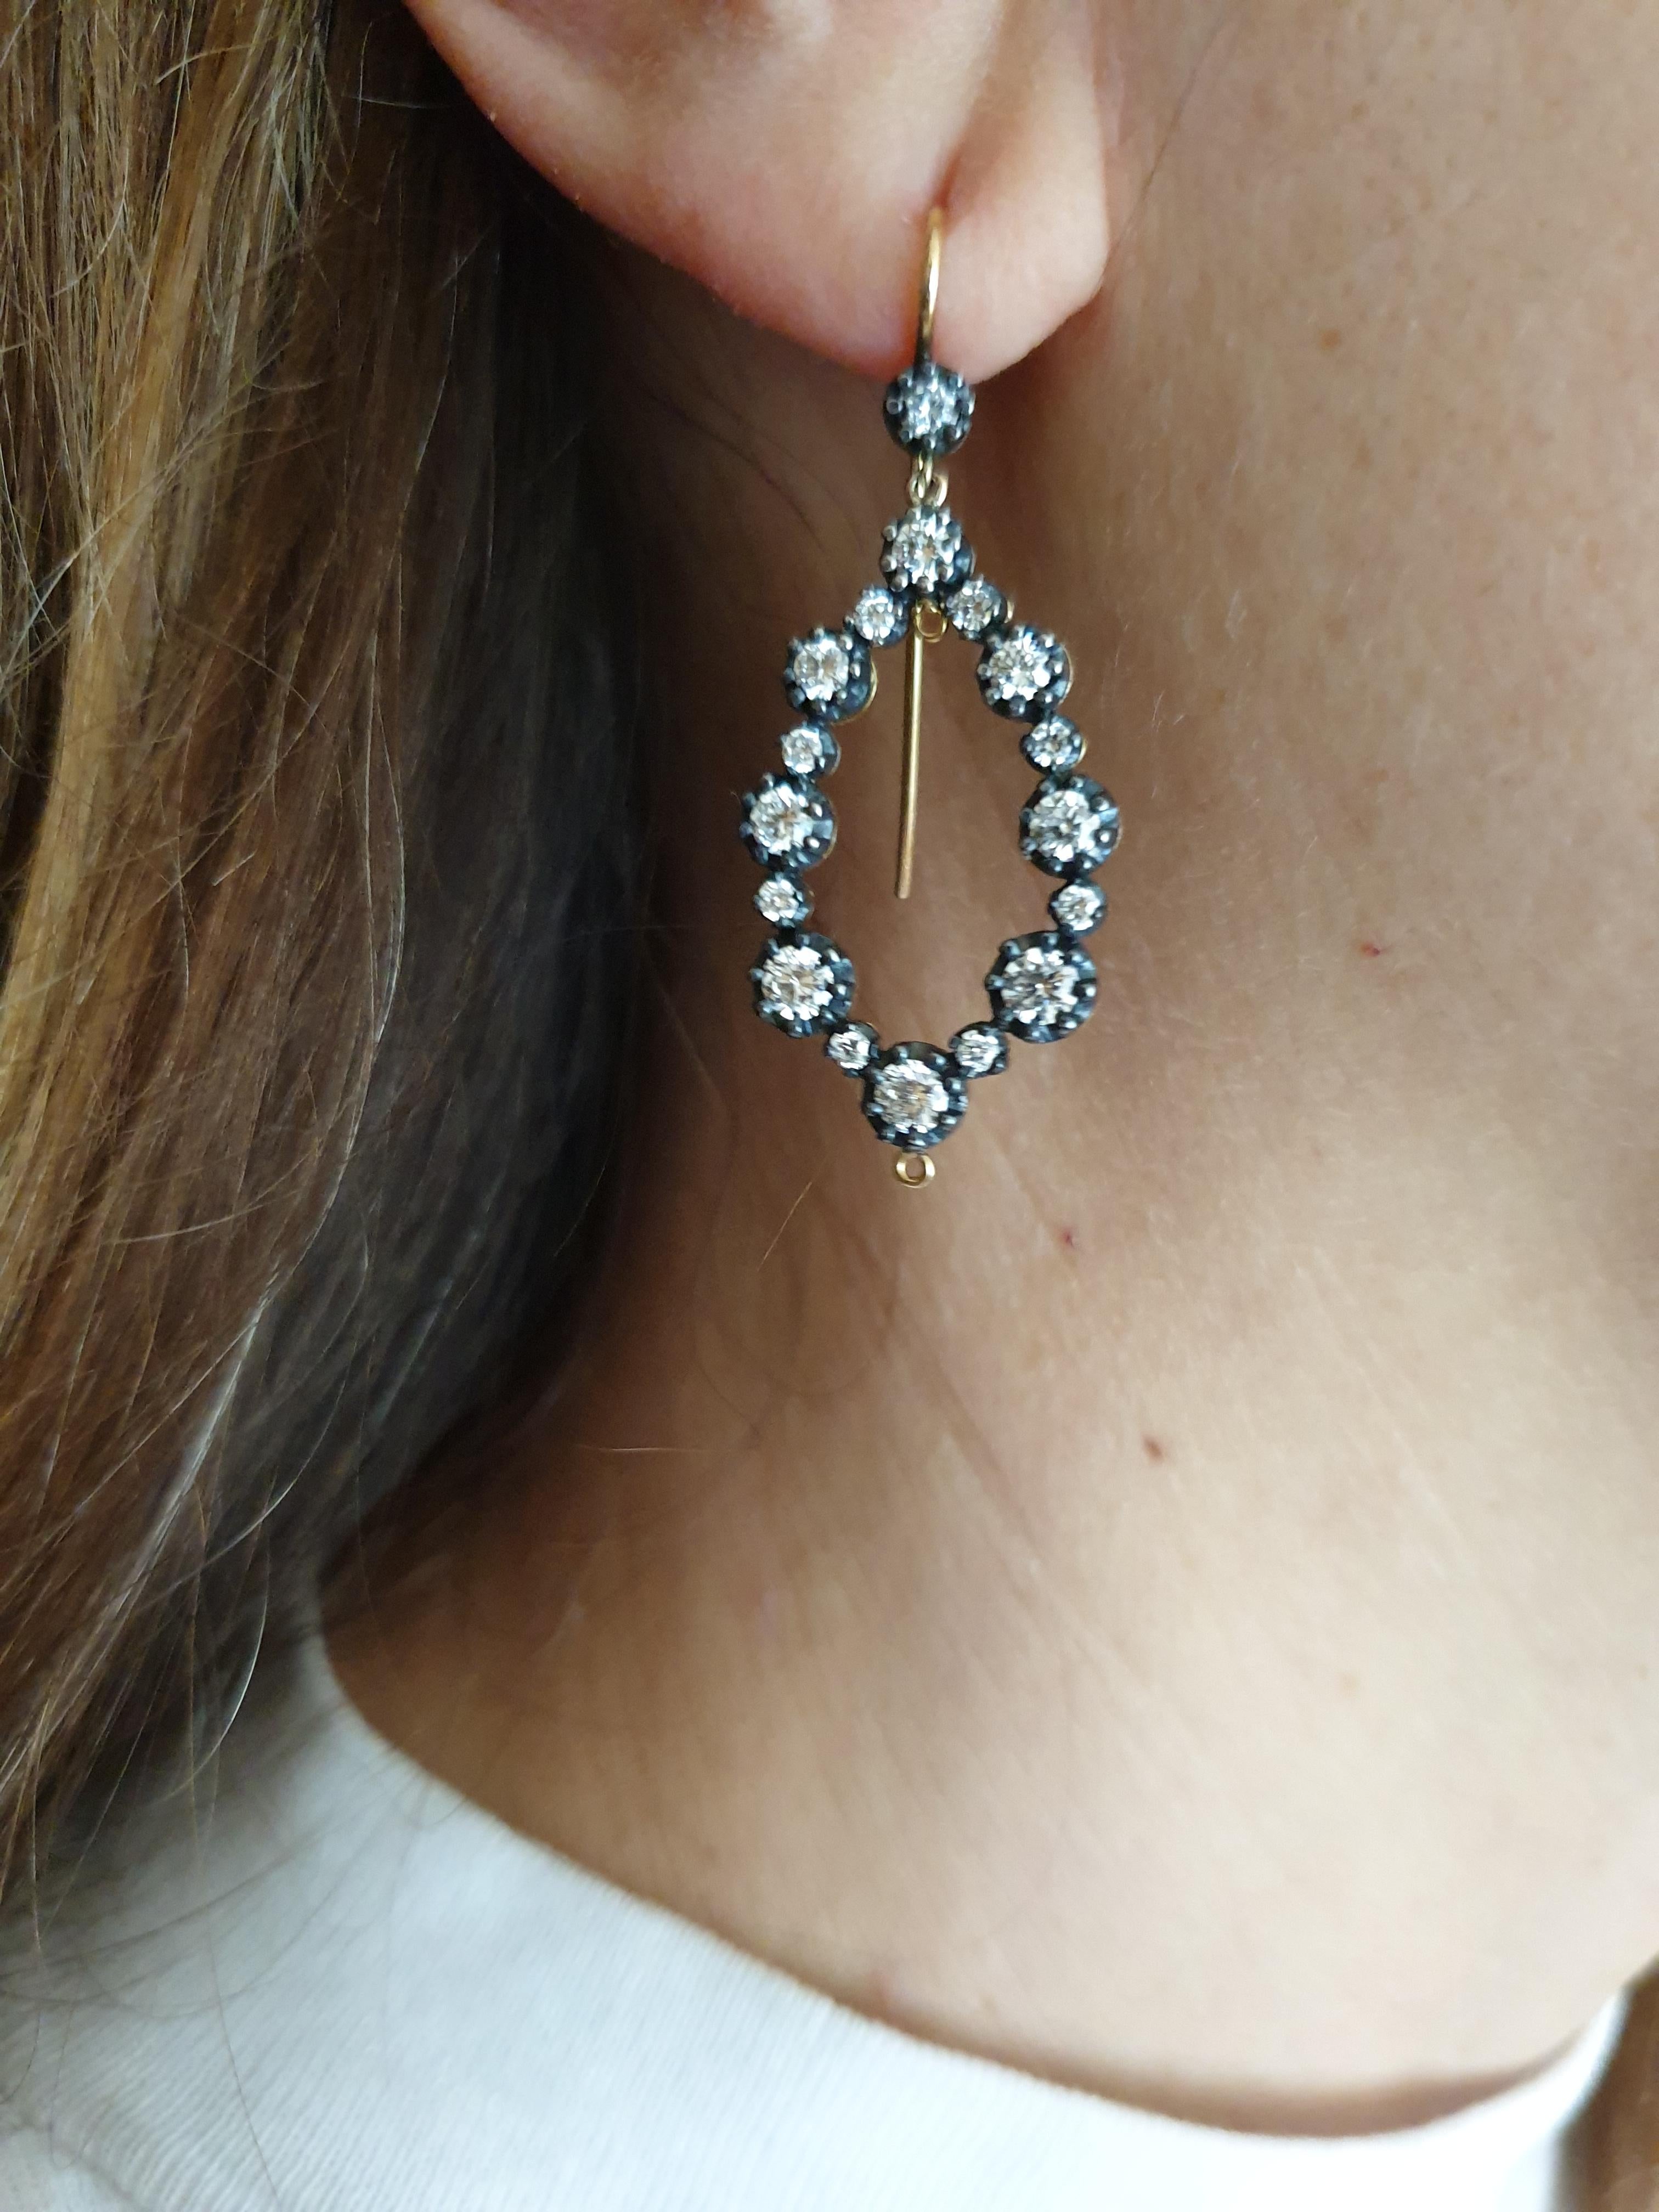 Handmade, silver topped gold brilliant cut diamond earrings, chandelier style.
